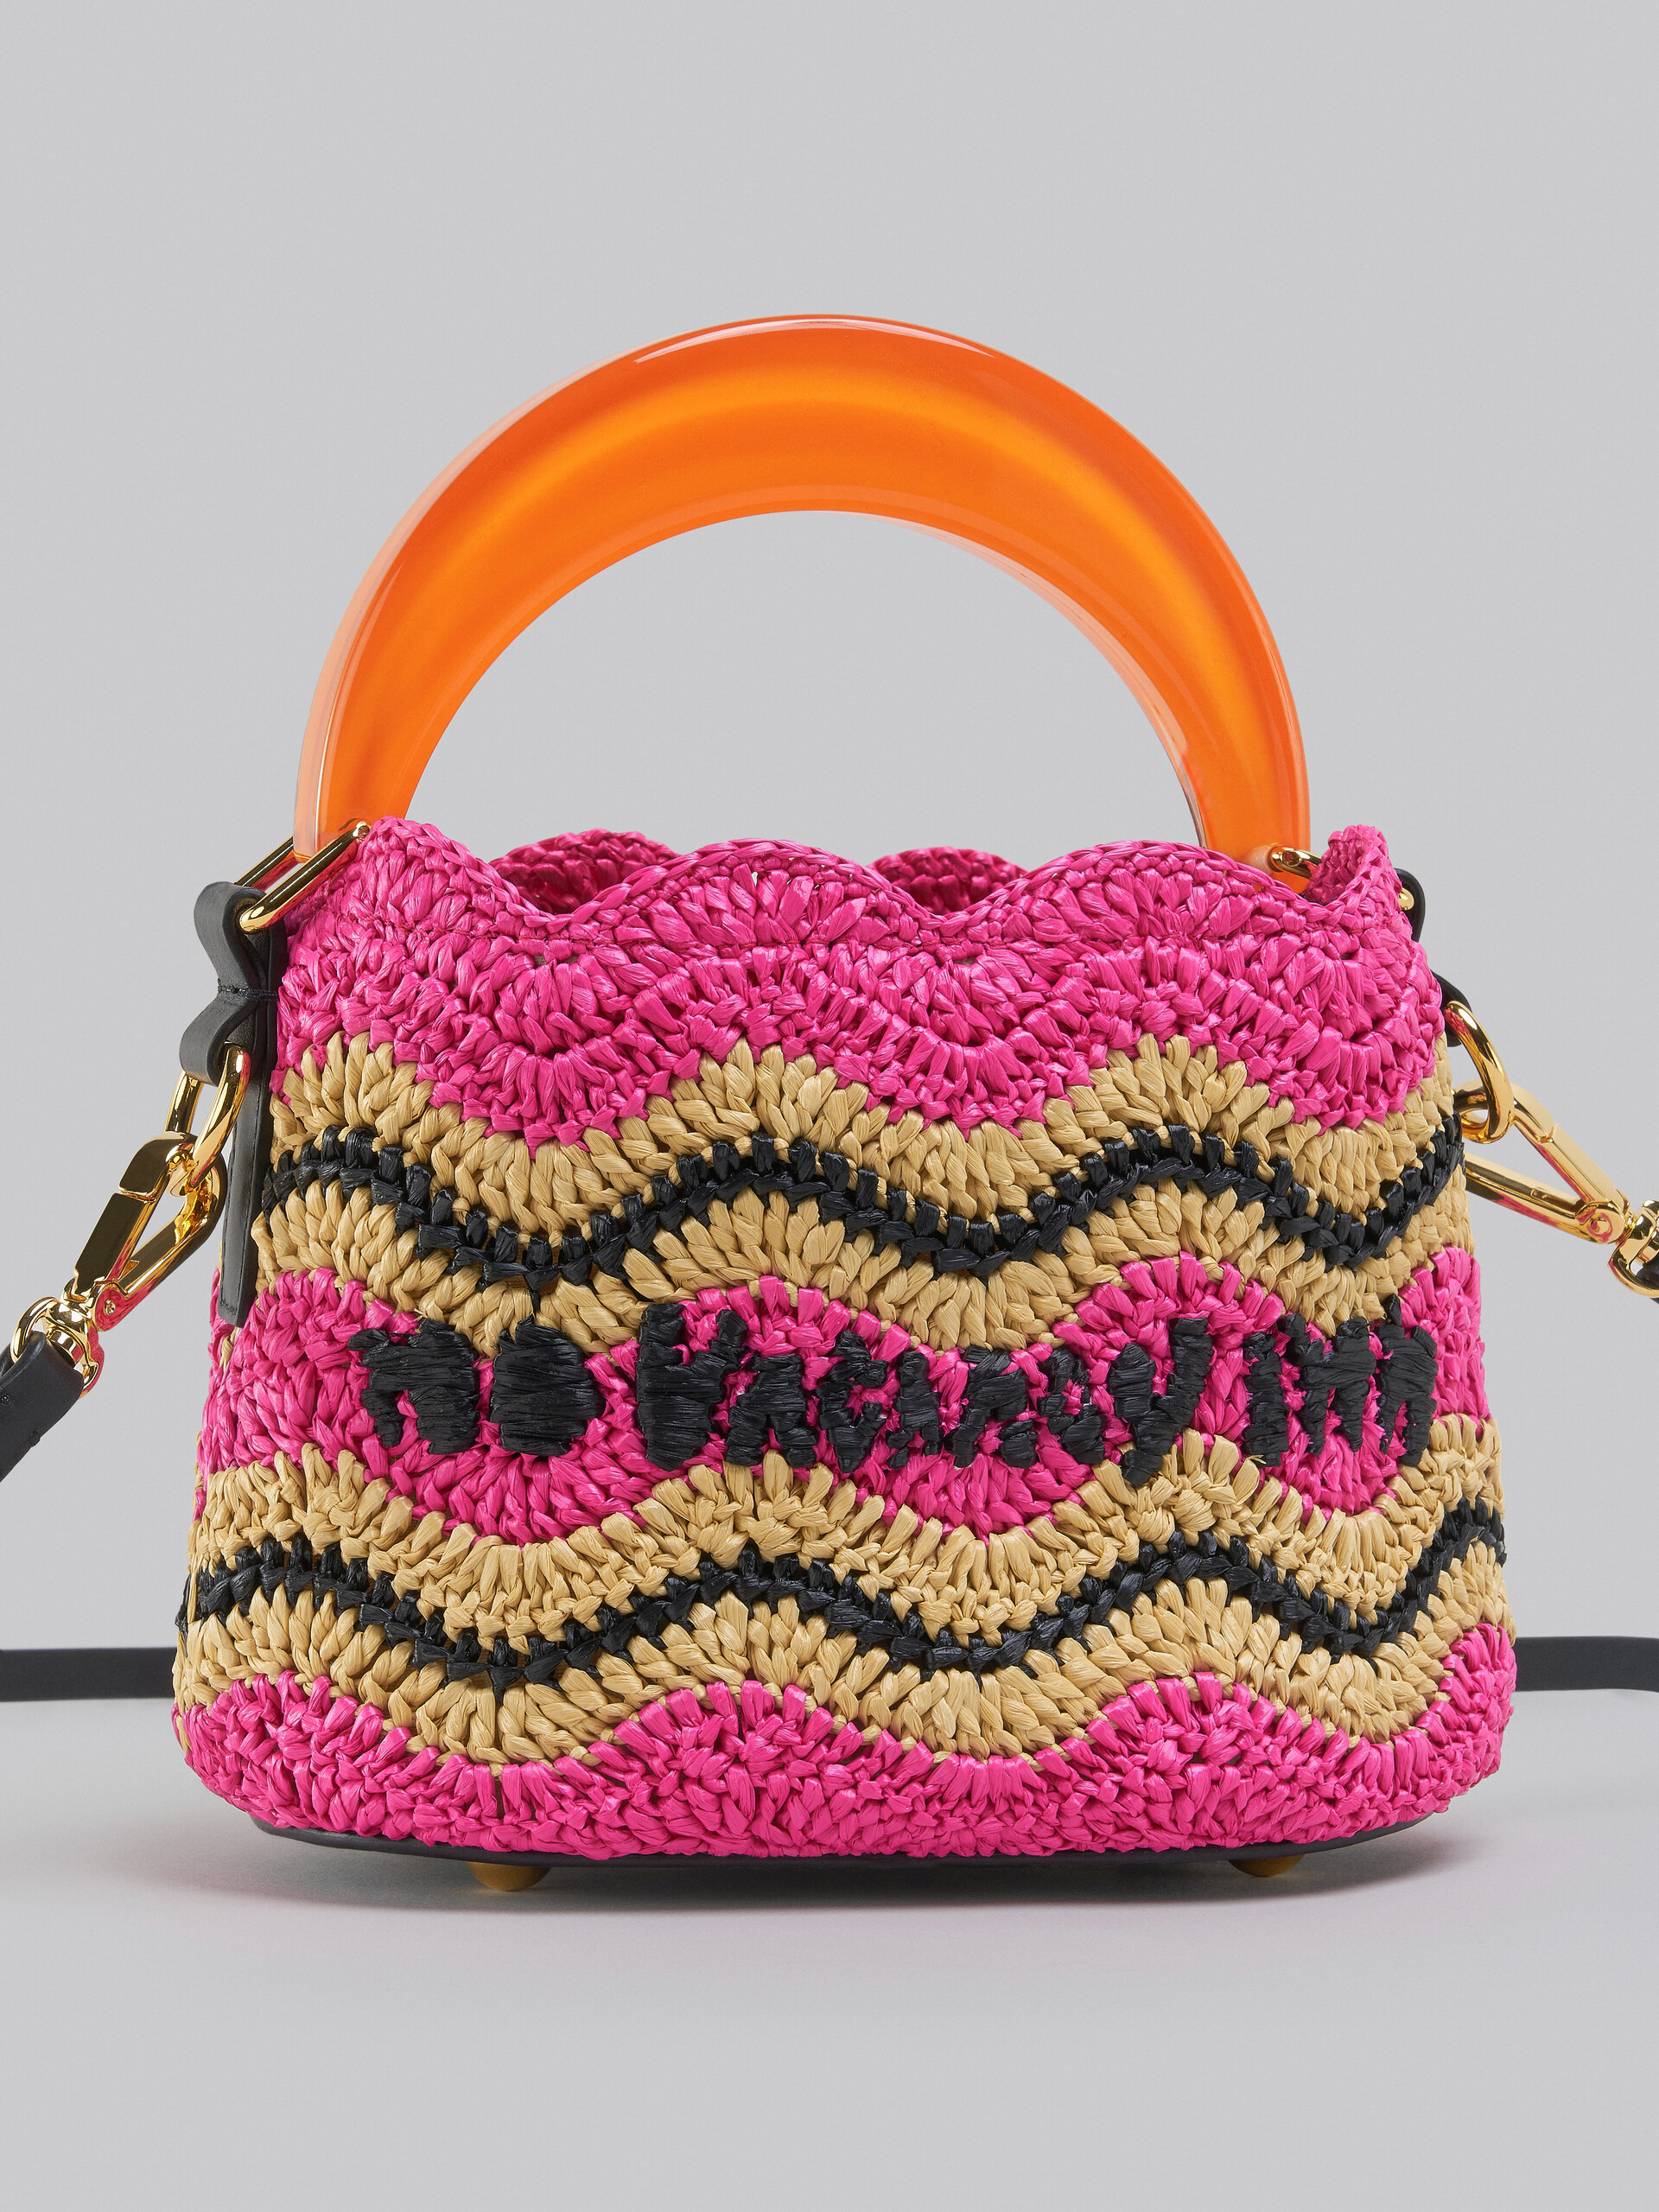 Marni x No Vacancy Inn - Venice Mini Bucket in fuchsia crochet raffia - Shoulder Bag - Image 5